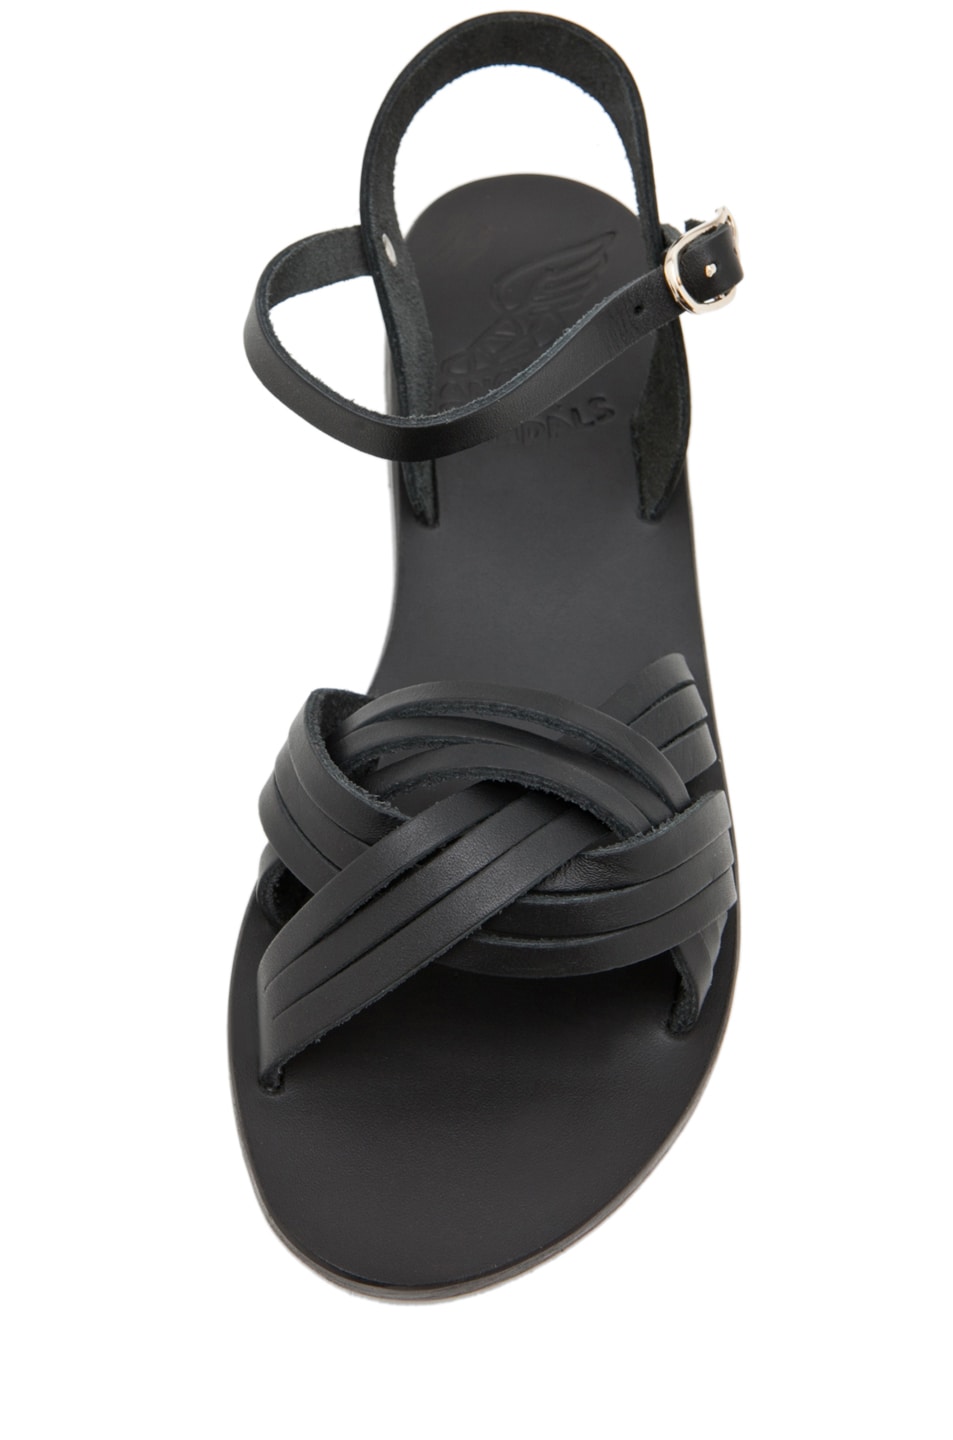 Ancient Greek Sandals Electra Calfskin Leather Sandals in Black | FWRD